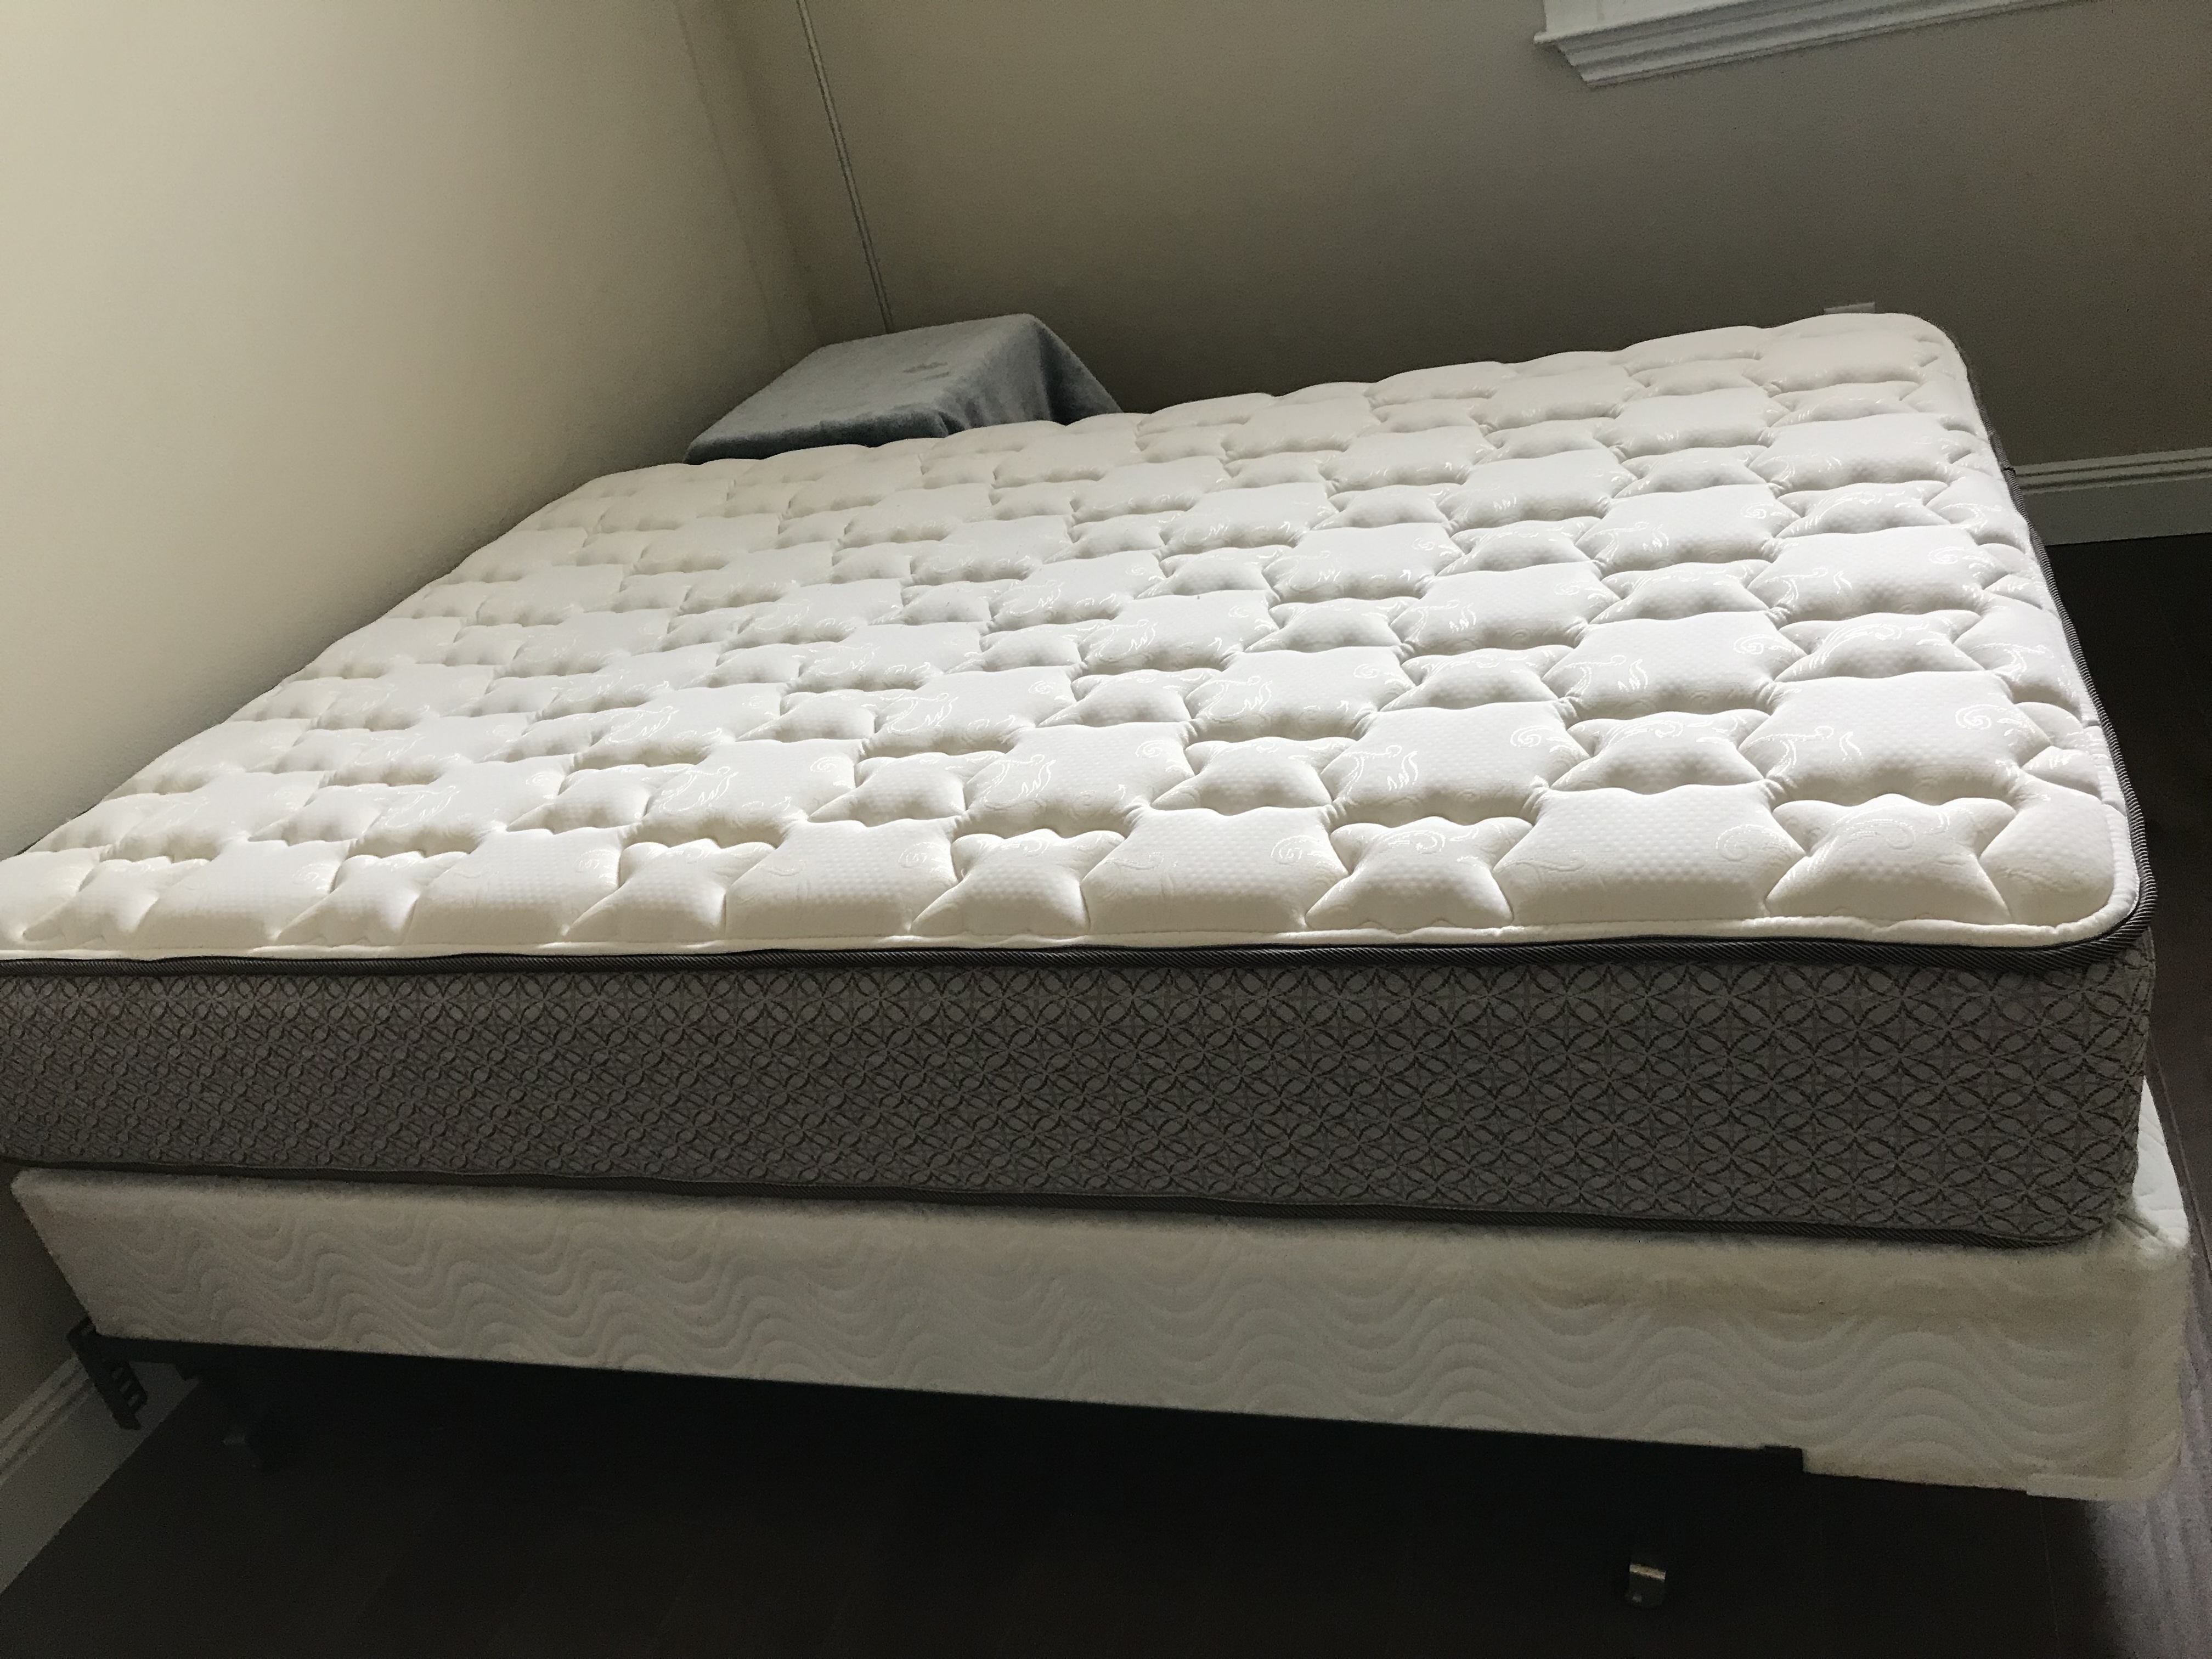 full.size bed mattress